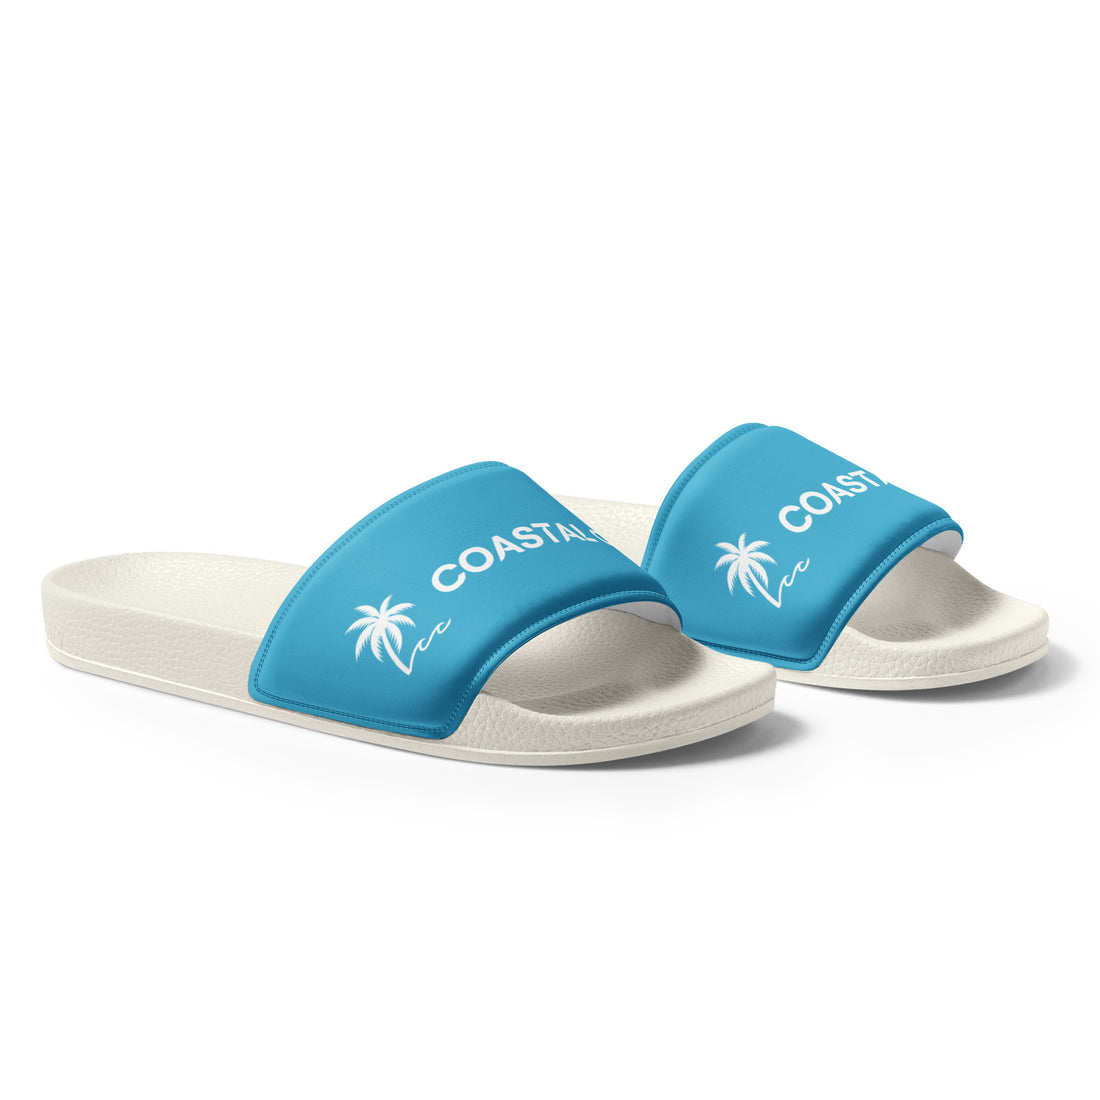 Men's Slides - Blue - Coastal Cool - Swimwear and Beachwear - Recycled fabrics